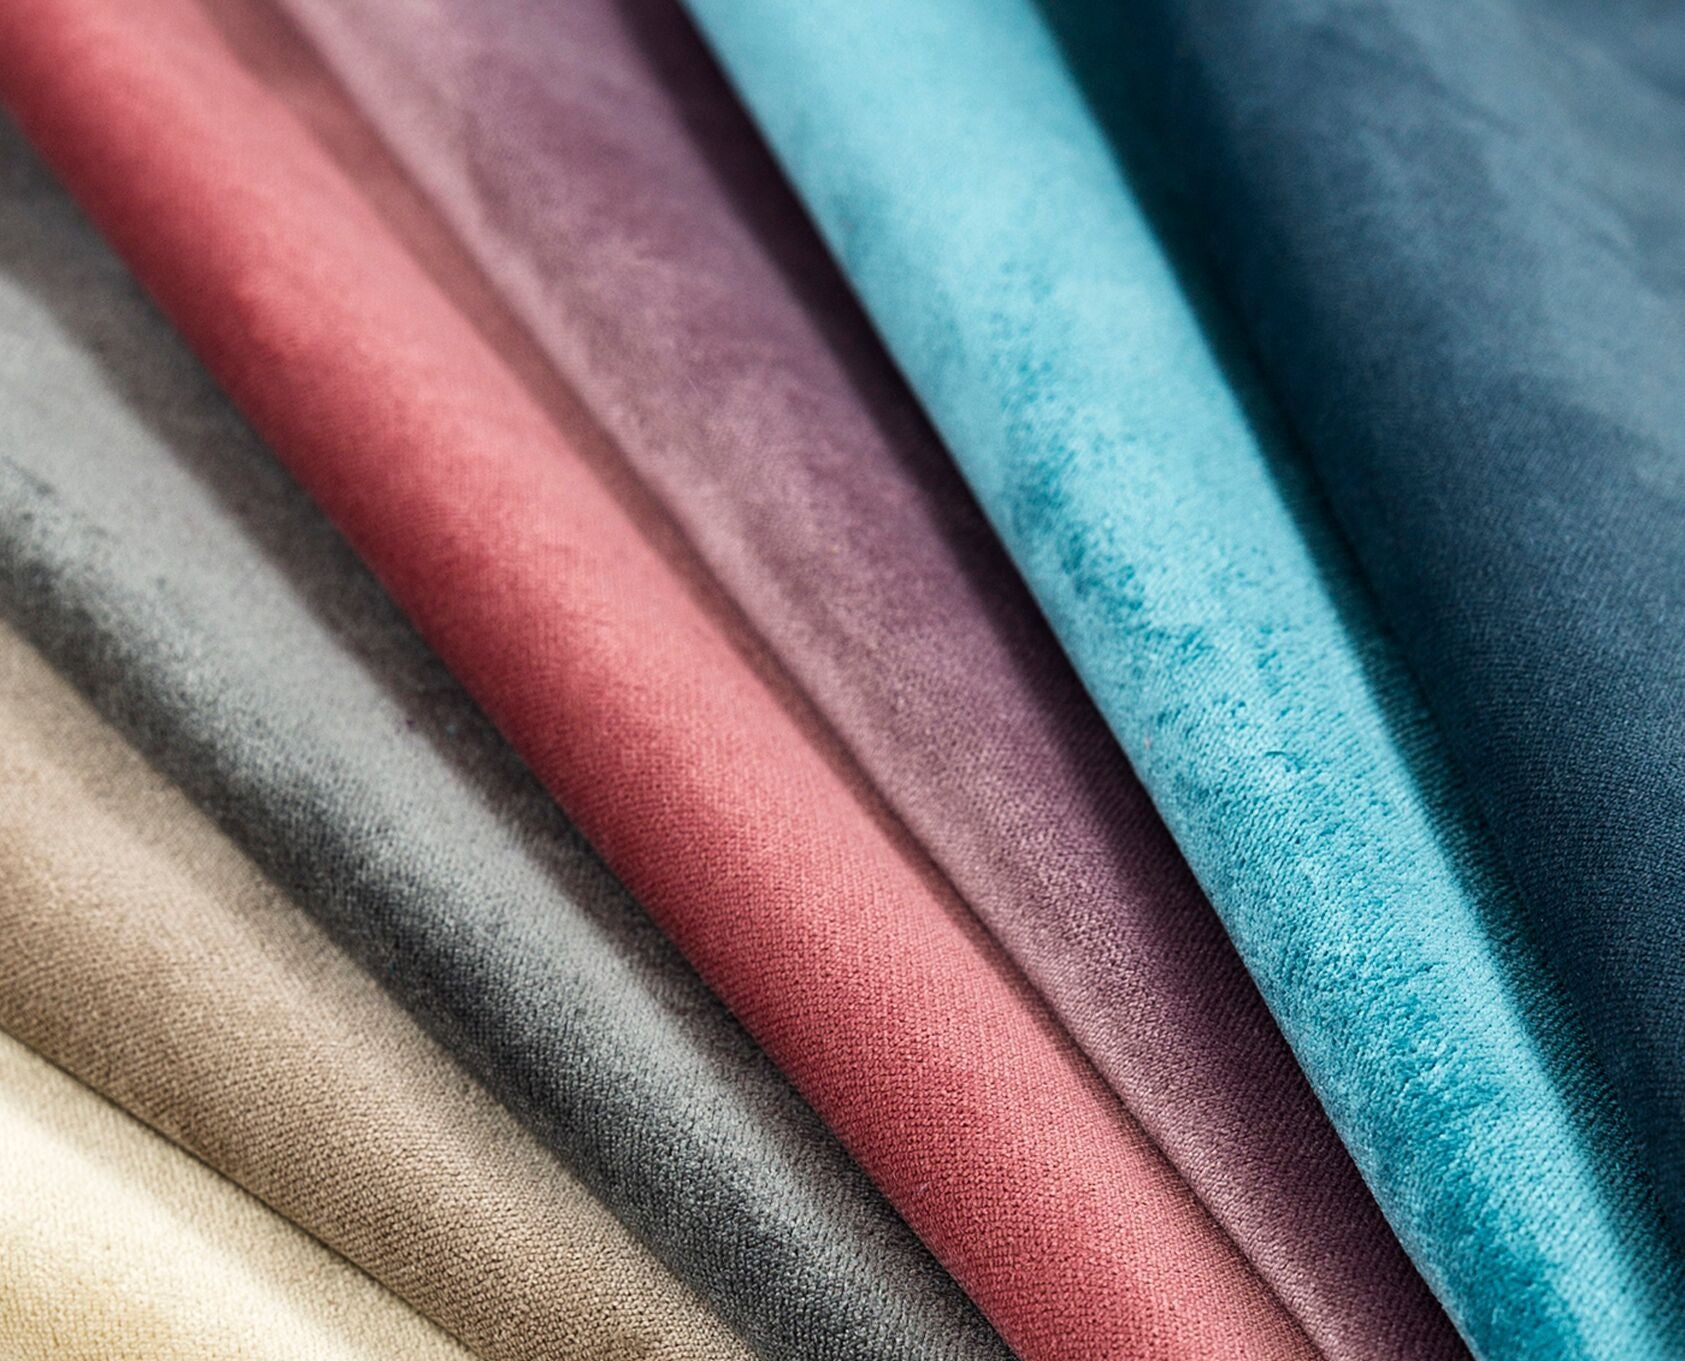 McAlister Textiles Matt Blue Teal Velvet 43cm x 43cm Cushion Sets Cushions and Covers 